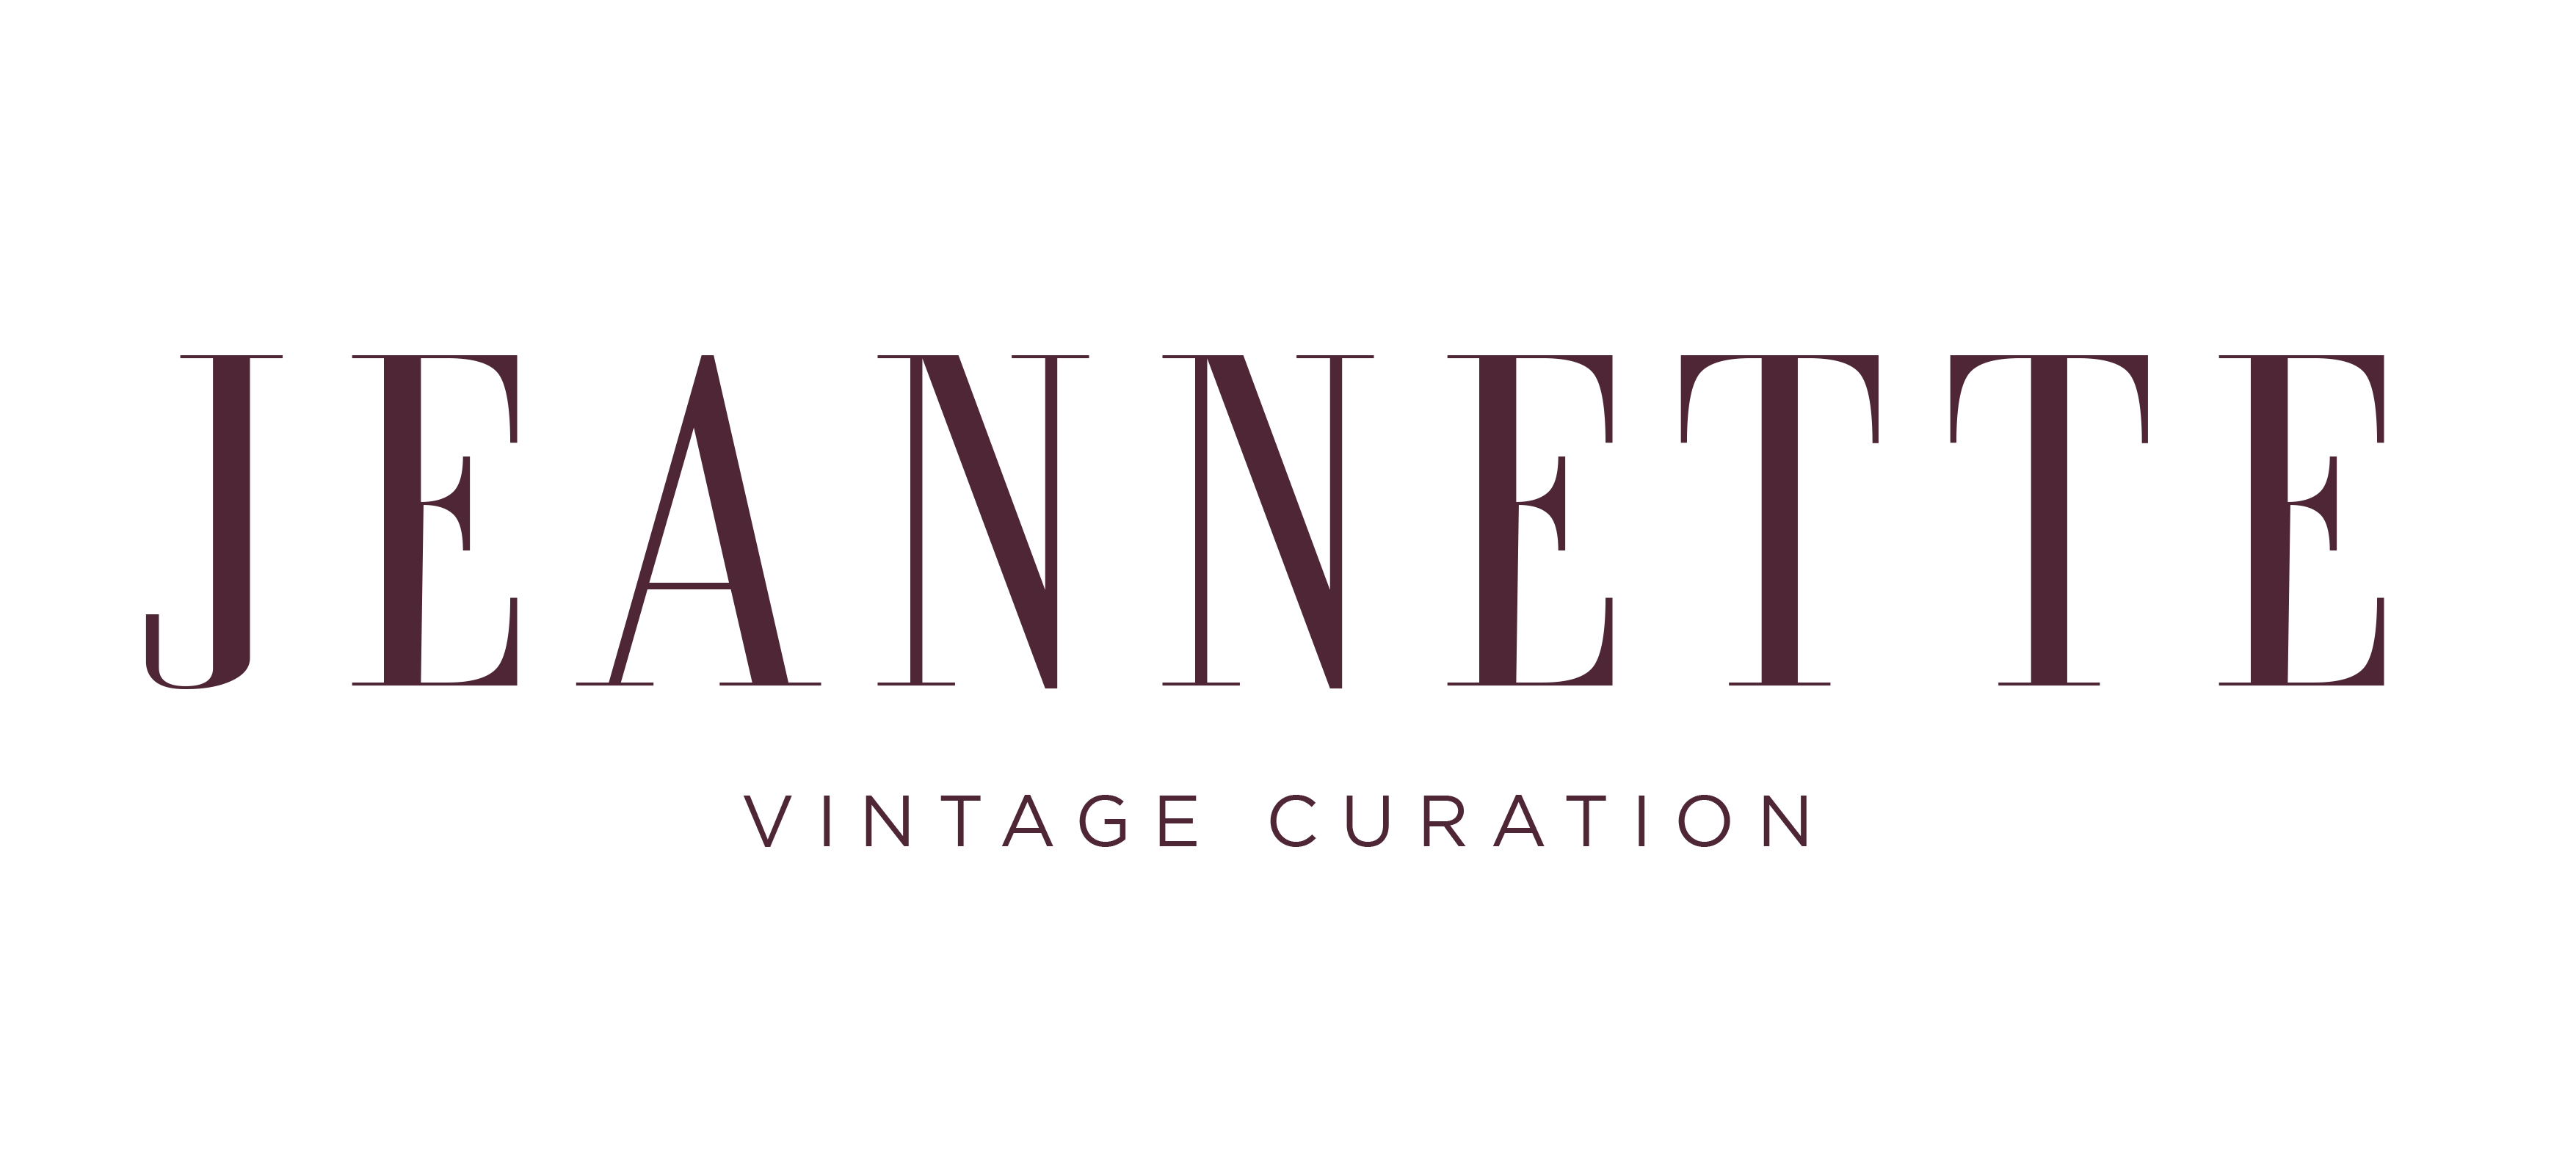 JEANNETTE SHOP - Vintage Curation